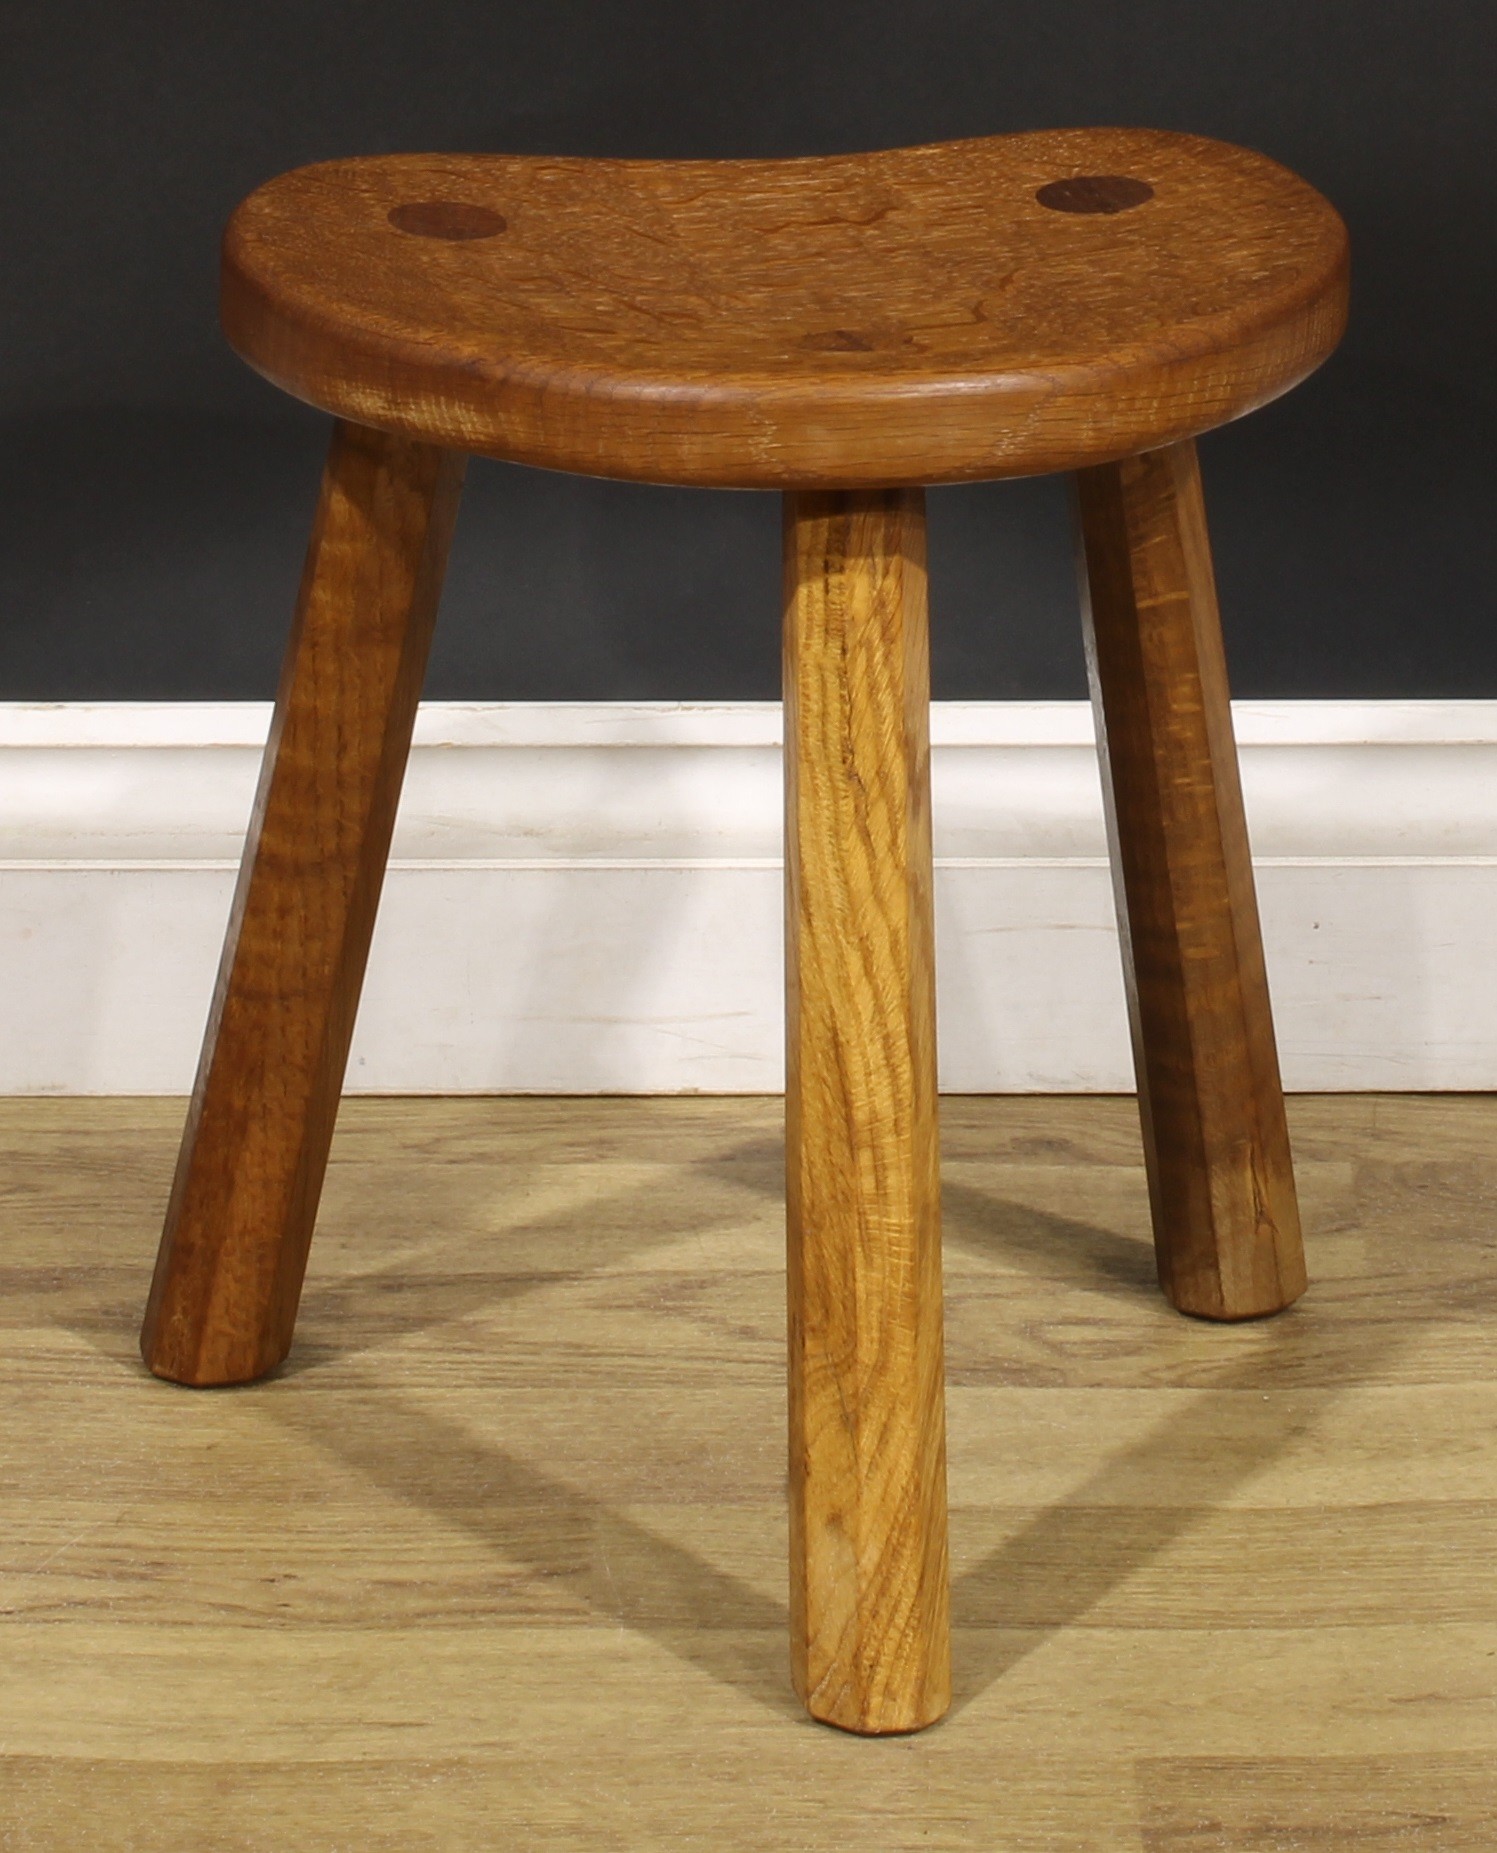 Robert Thompson, Mouseman of Kilburn, an oak milking stool, carved mouse signature, 35.5cm high, - Image 4 of 5